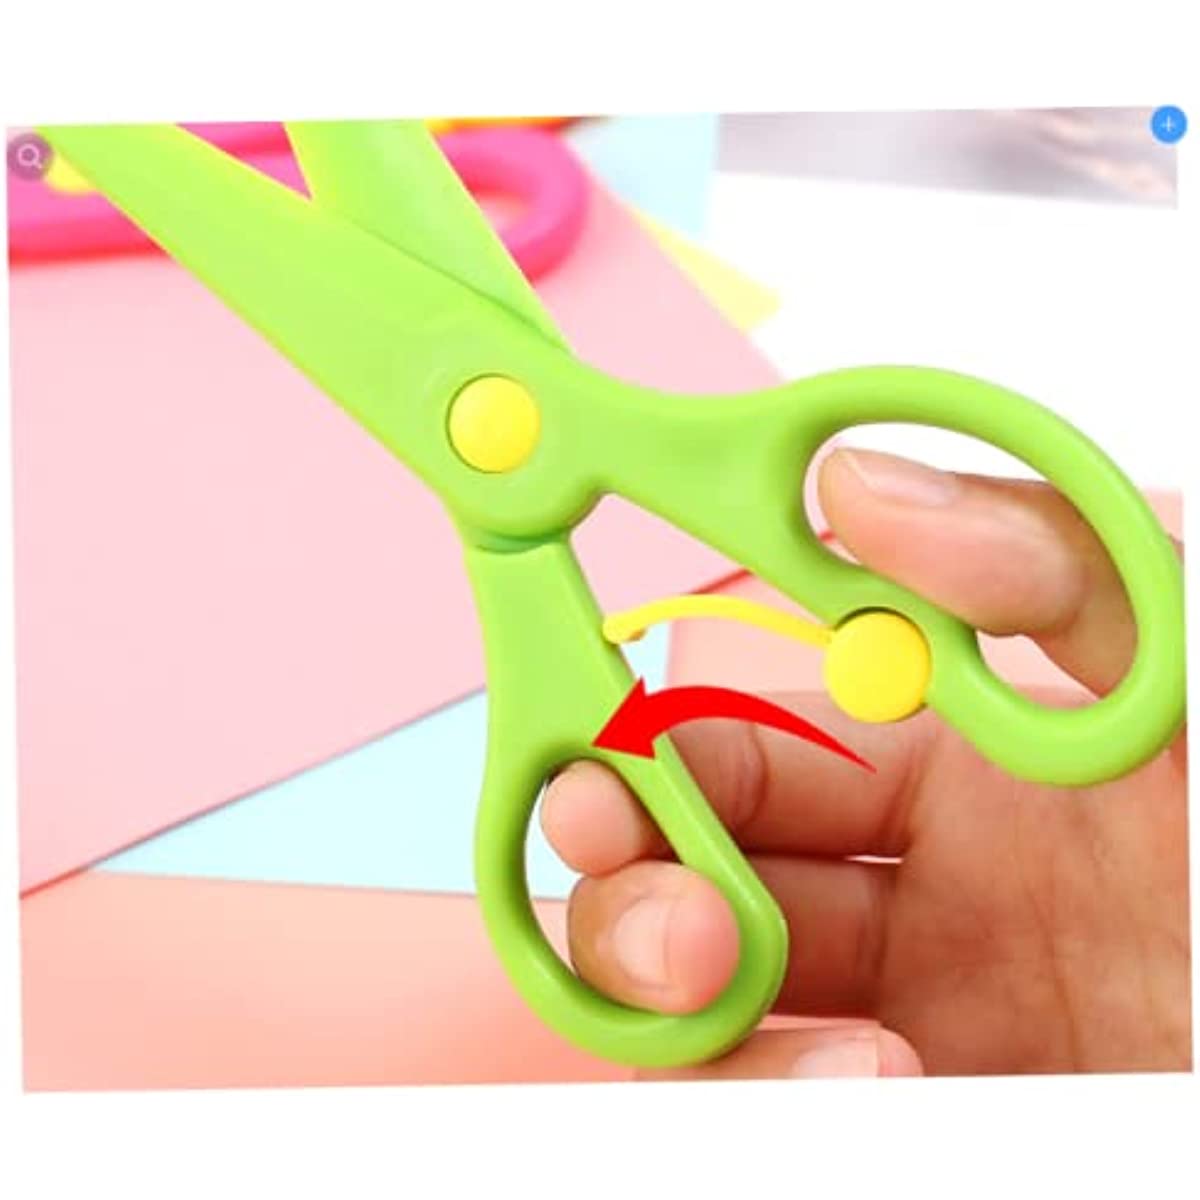 Playdough Scissors 